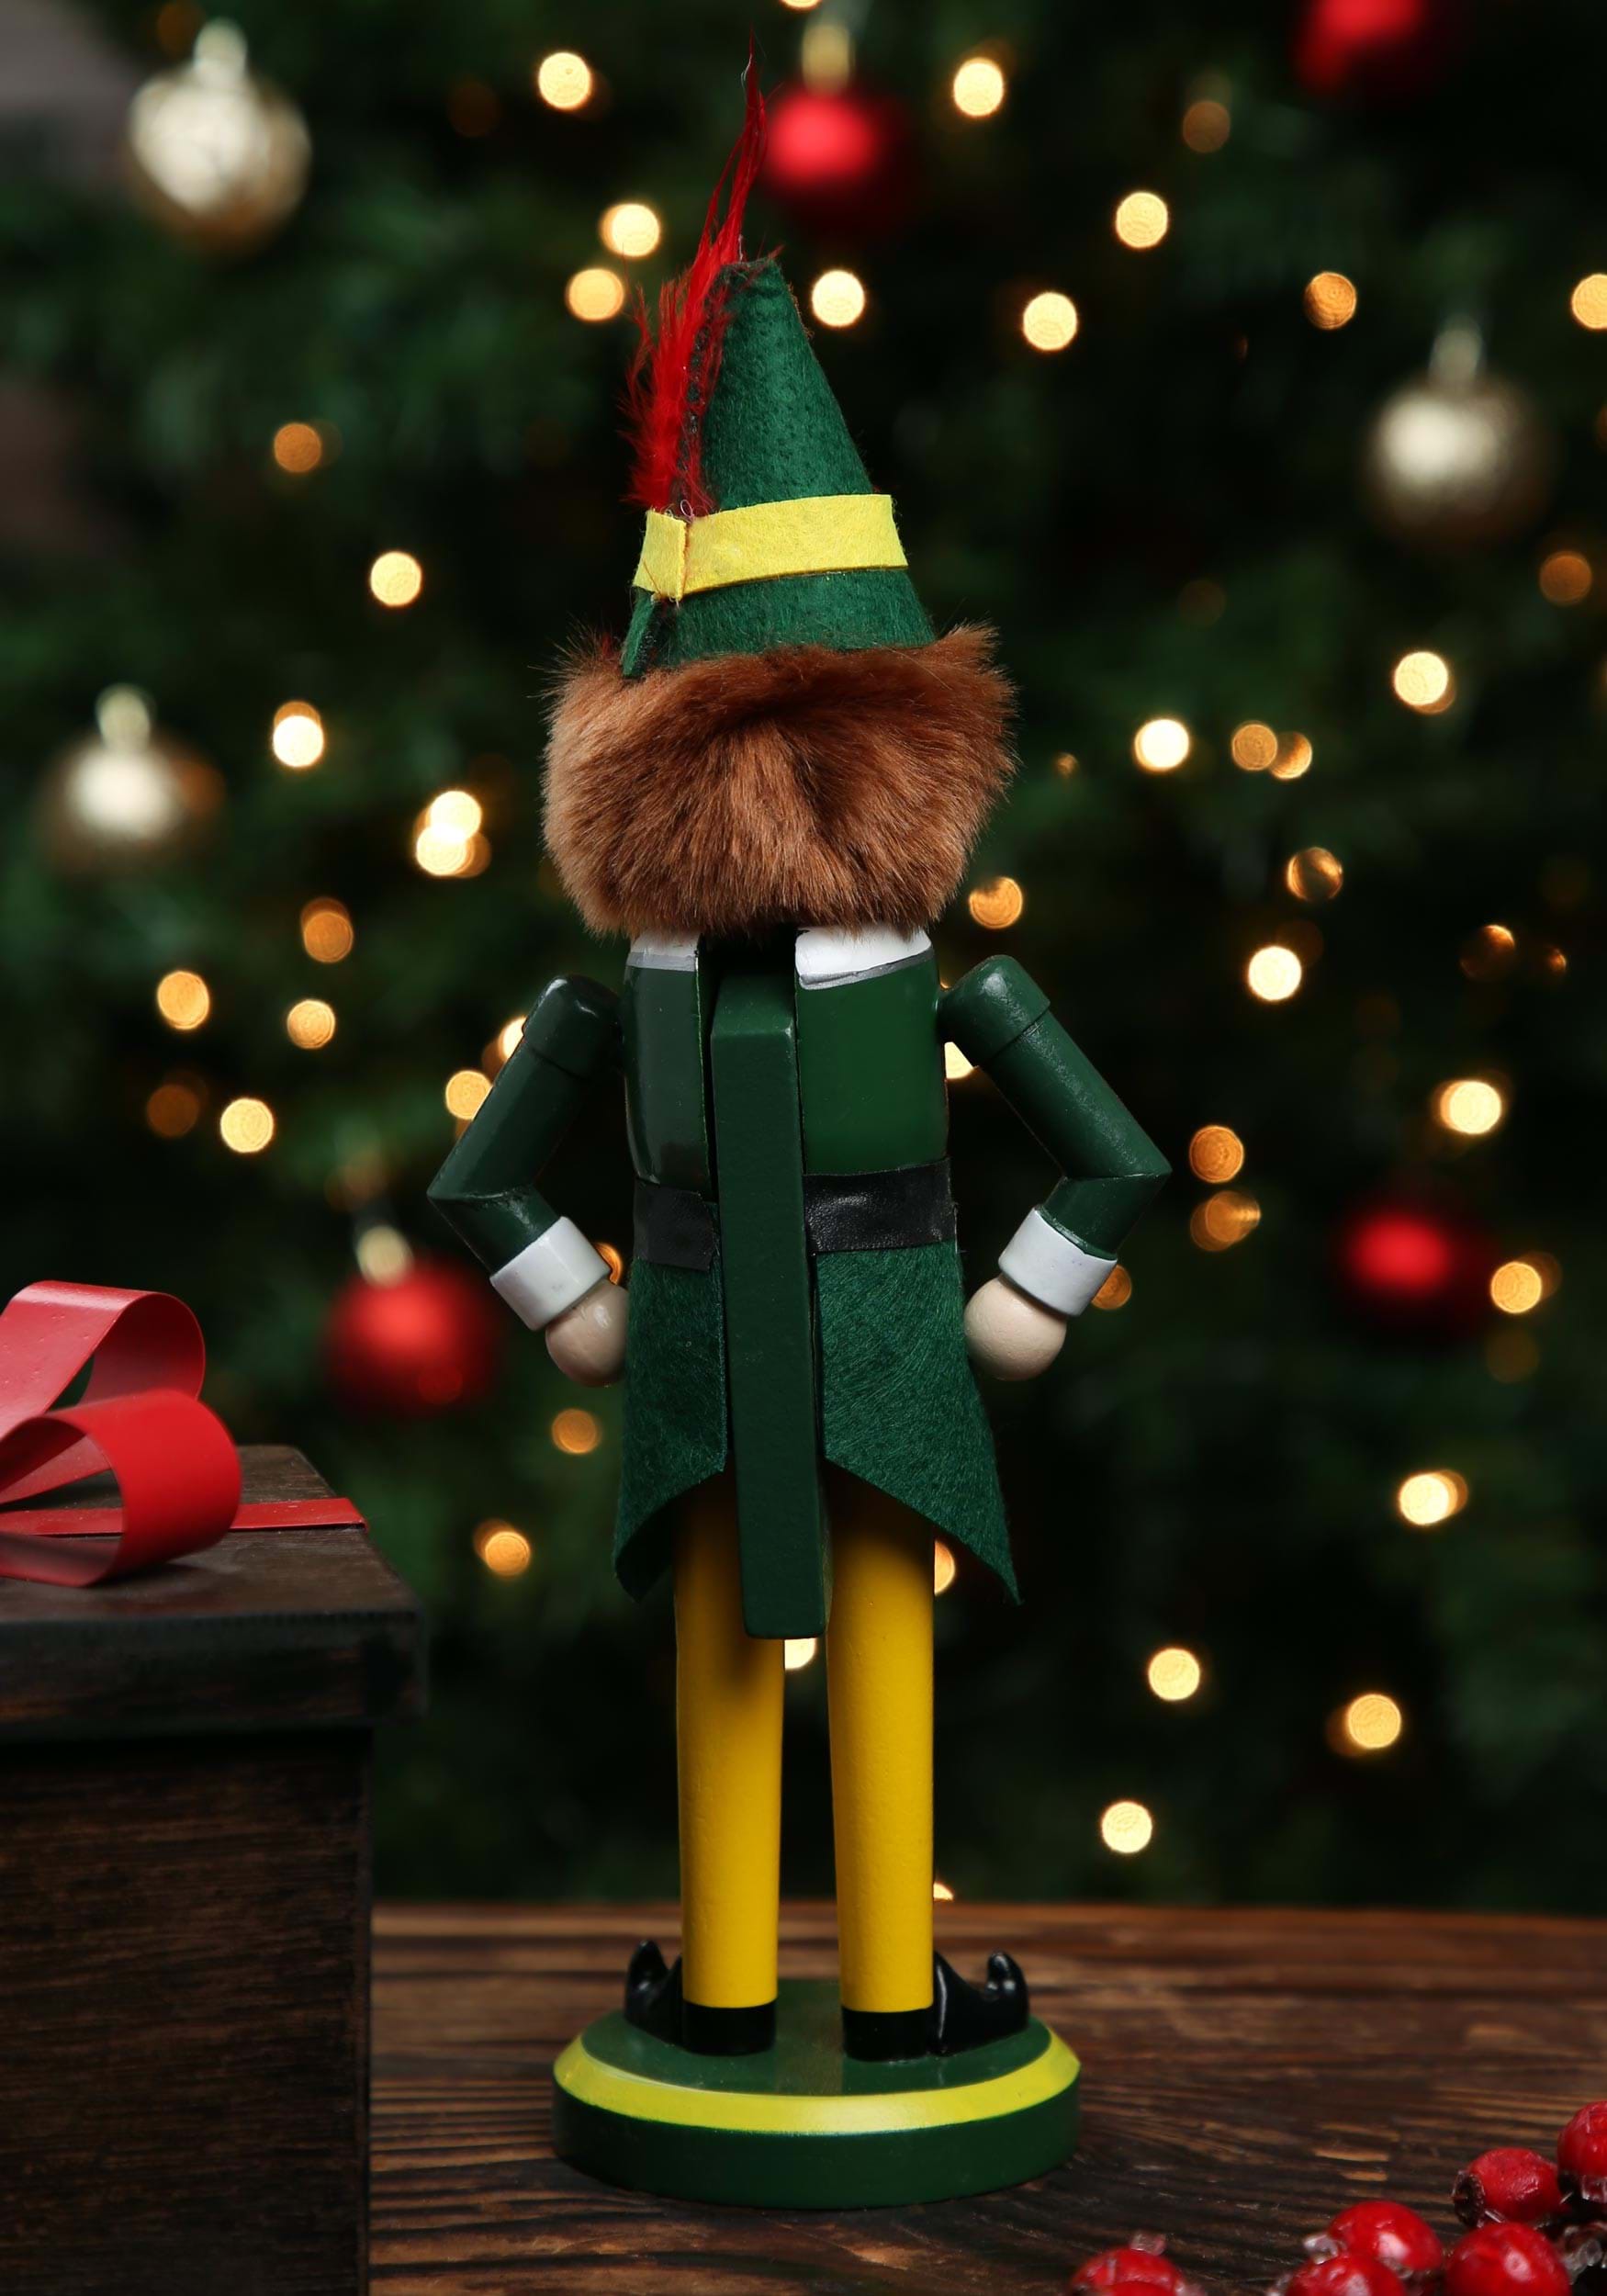 11 Inch Wooden Buddy the Elf Nutcracker | Elf Christmas Decorations